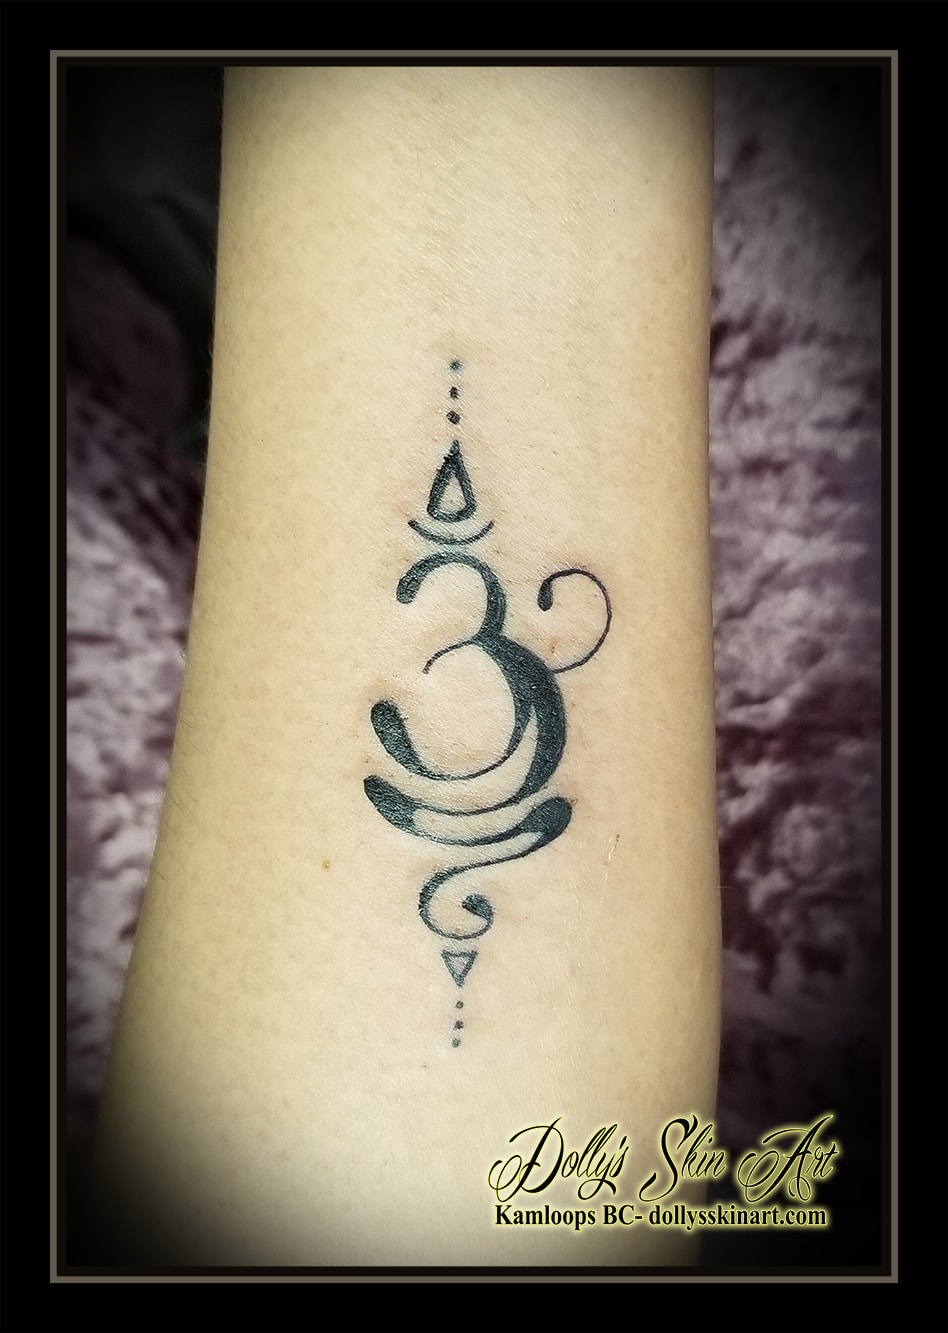 breathe tattoo symbol sanskrit indian thai ohm black tattoo kamloops dolly's skin art